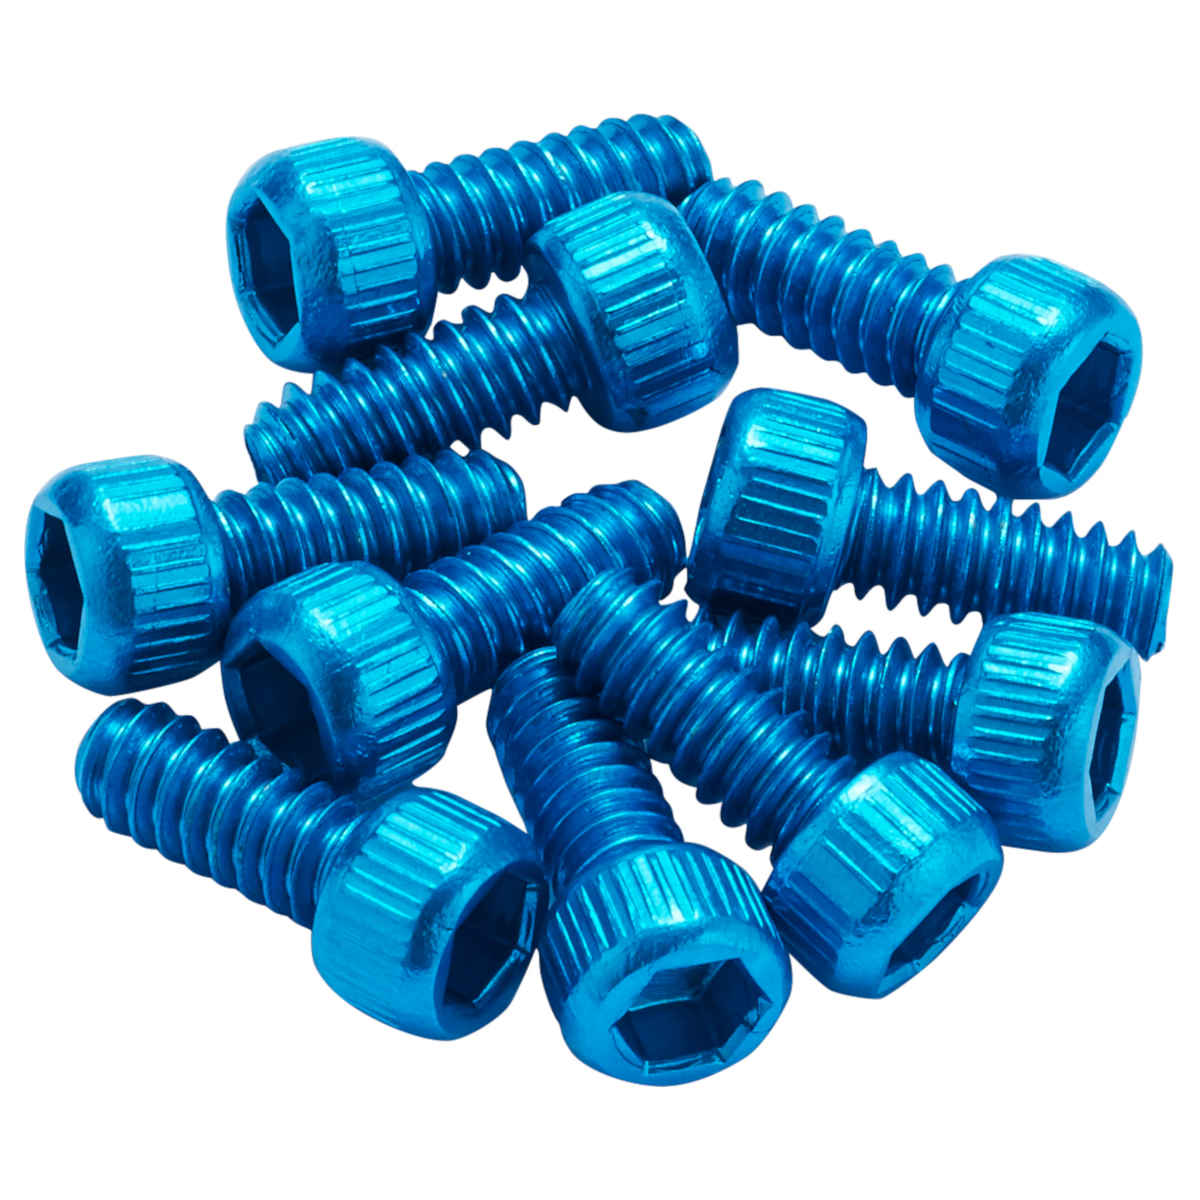 Produktbild von Reverse Components Aluminium Pedal Pins für Escape Pro &amp; Black ONE - hellblau